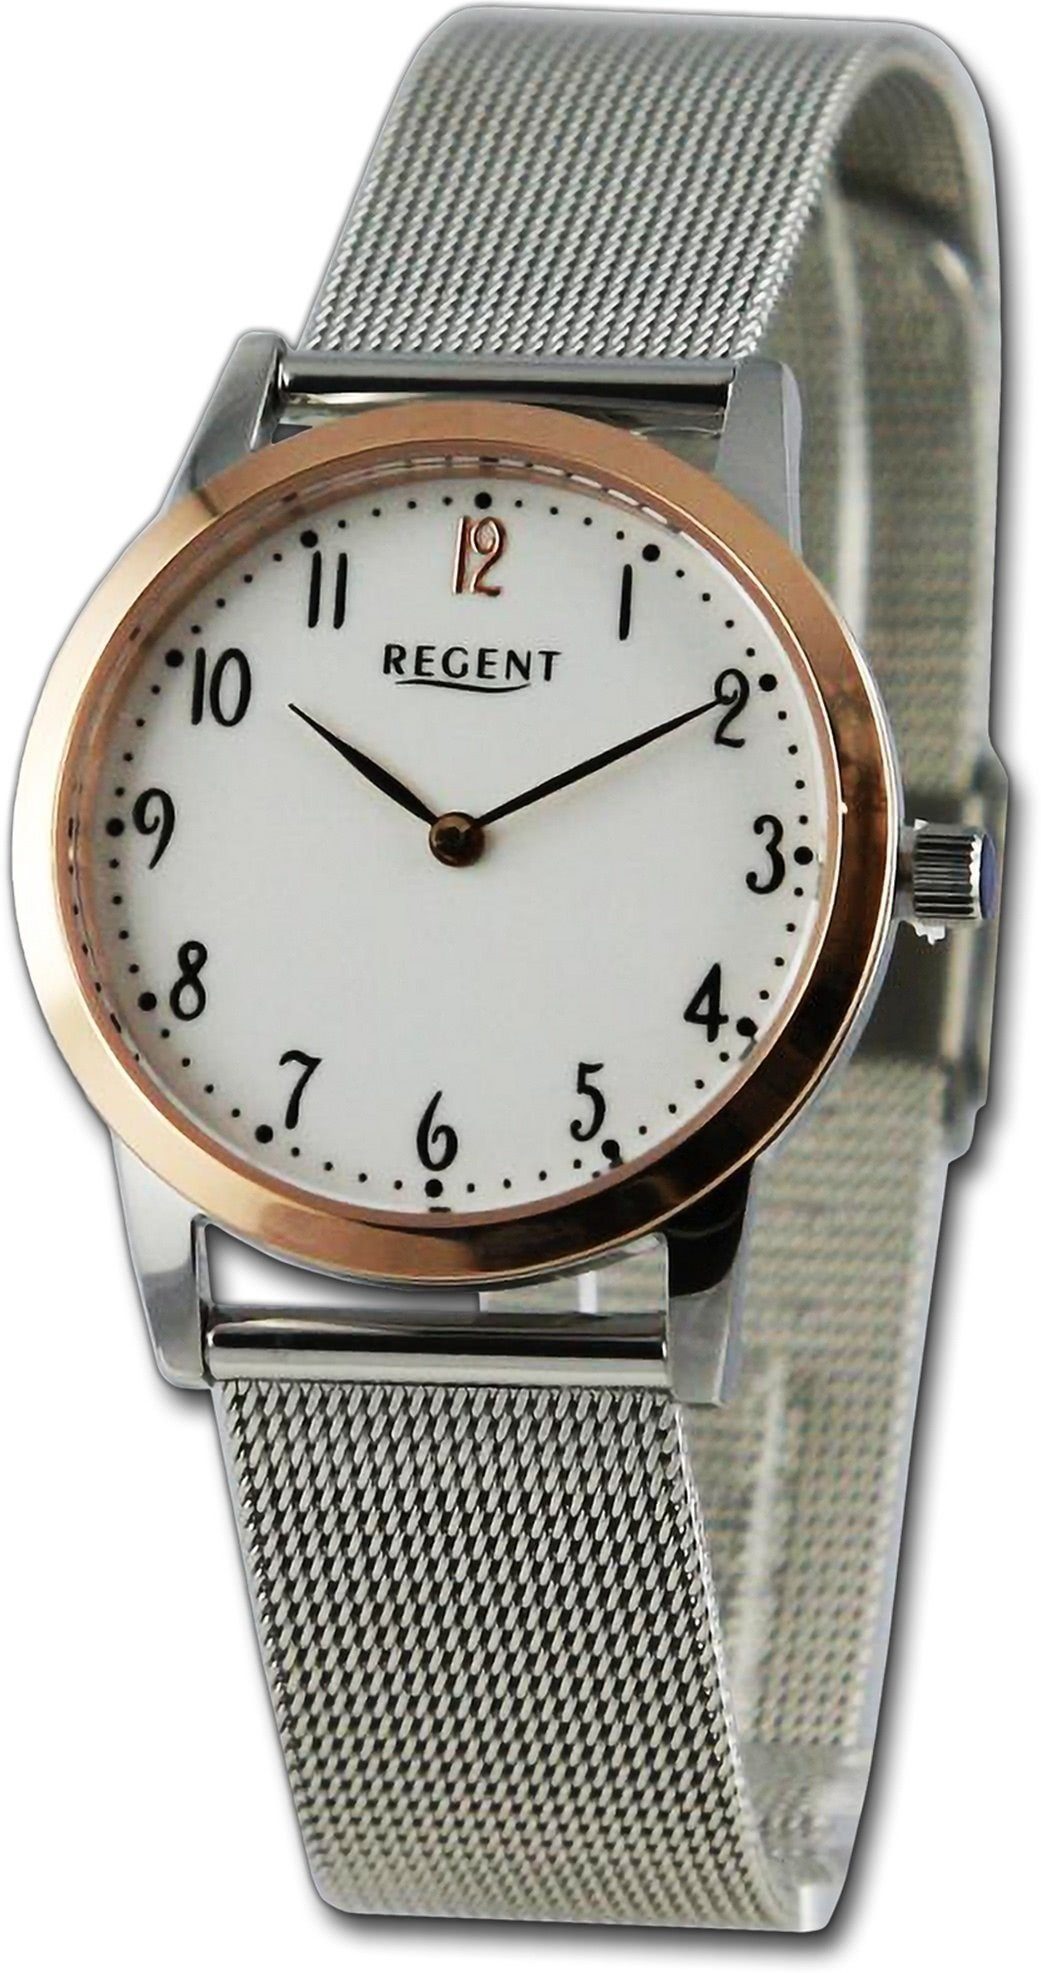 Regent Quarzuhr Regent Damen Armbanduhr Analog, Damenuhr Metallarmband silber, rundes Gehäuse, extra groß (ca. 30mm)